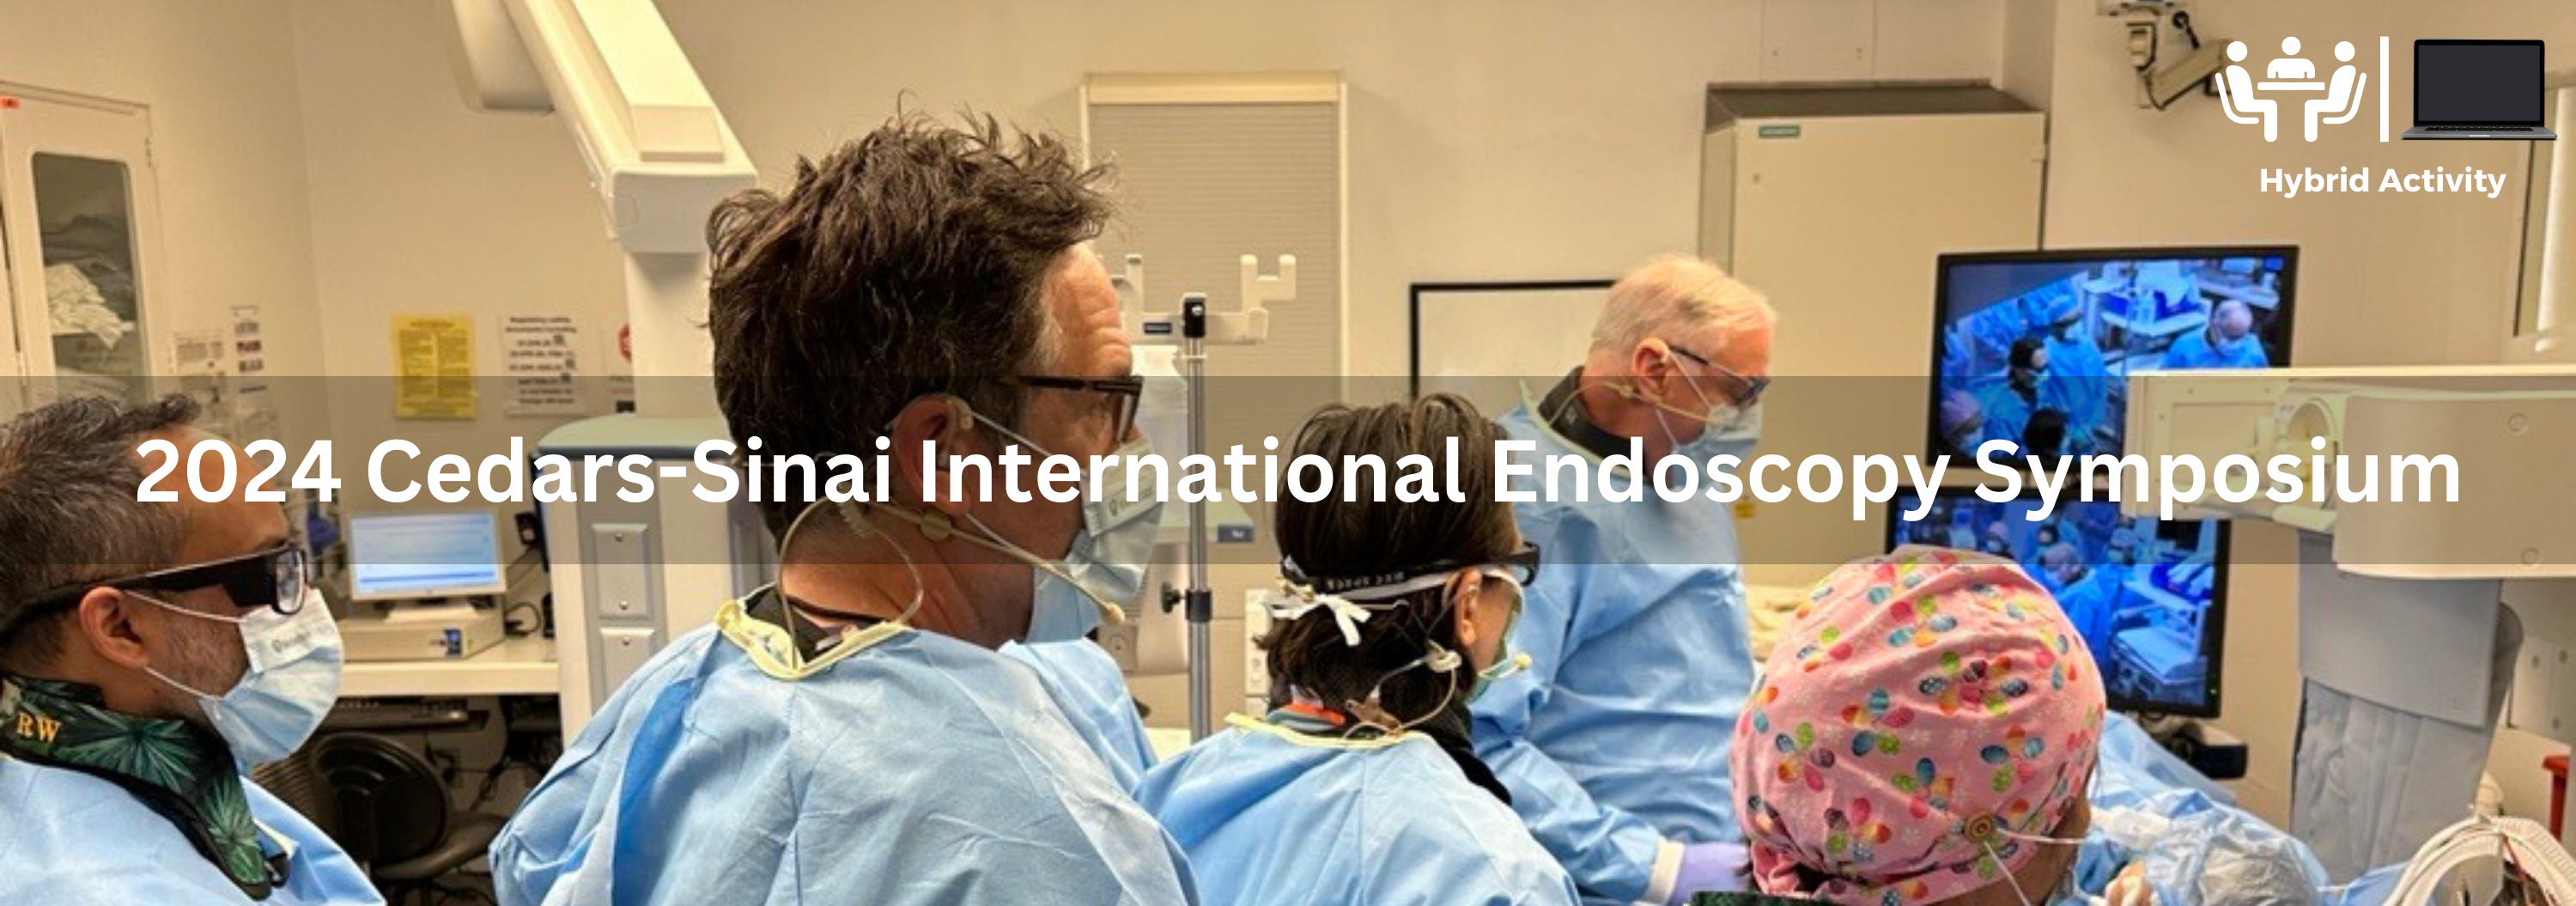 2024 Cedars-Sinai International Endoscopy Symposium Banner